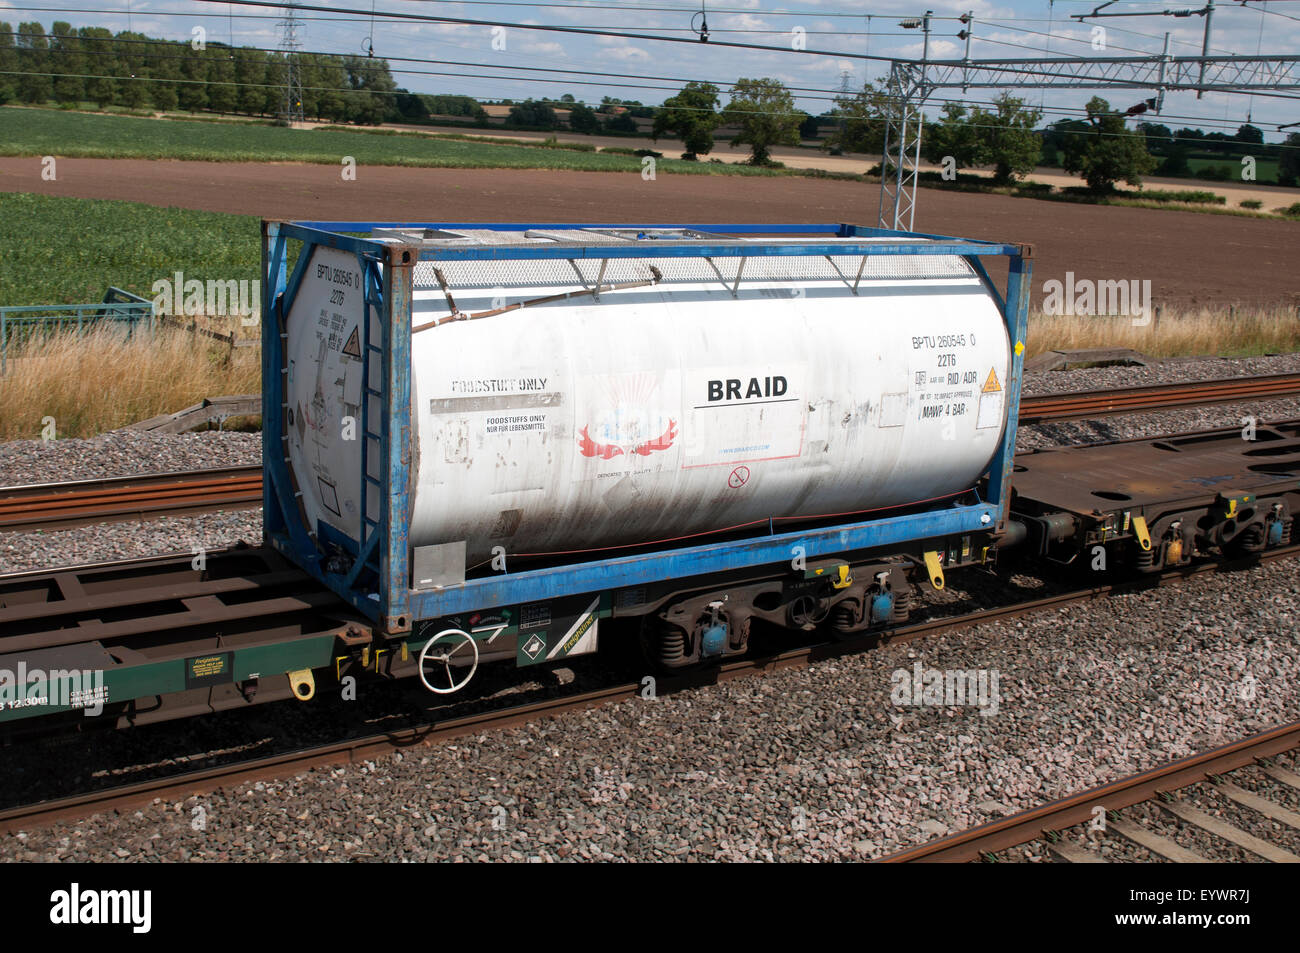 Braid foodstuff railway tank on the West Coast Main Line, Easenhall, Warwickshire, UK Stock Photo